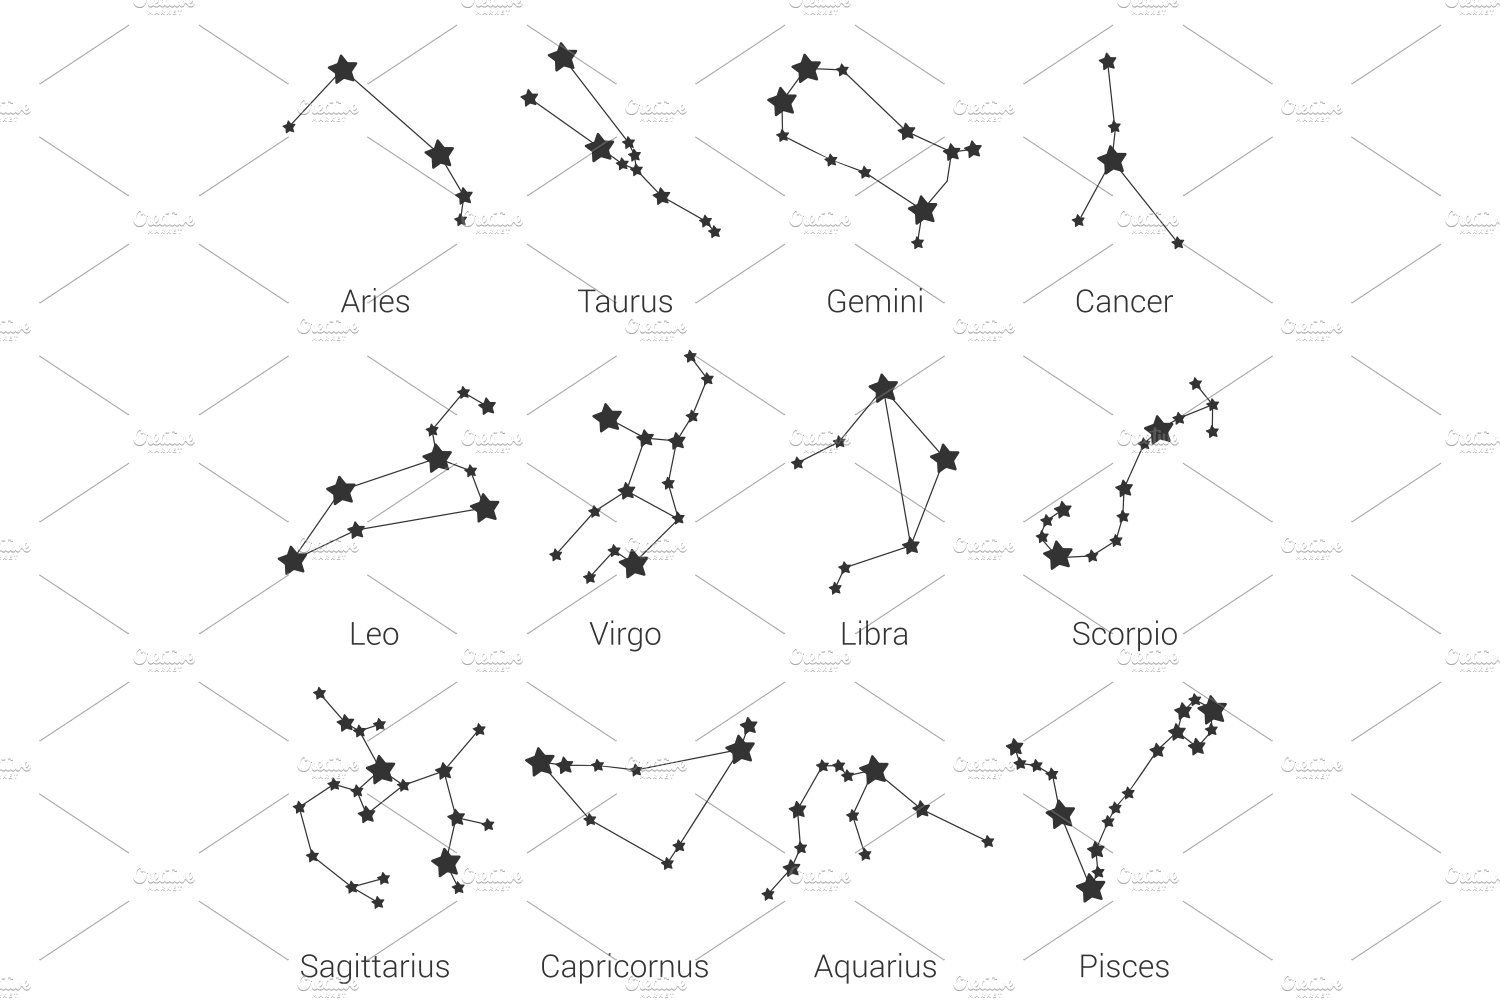 zodiac constellations